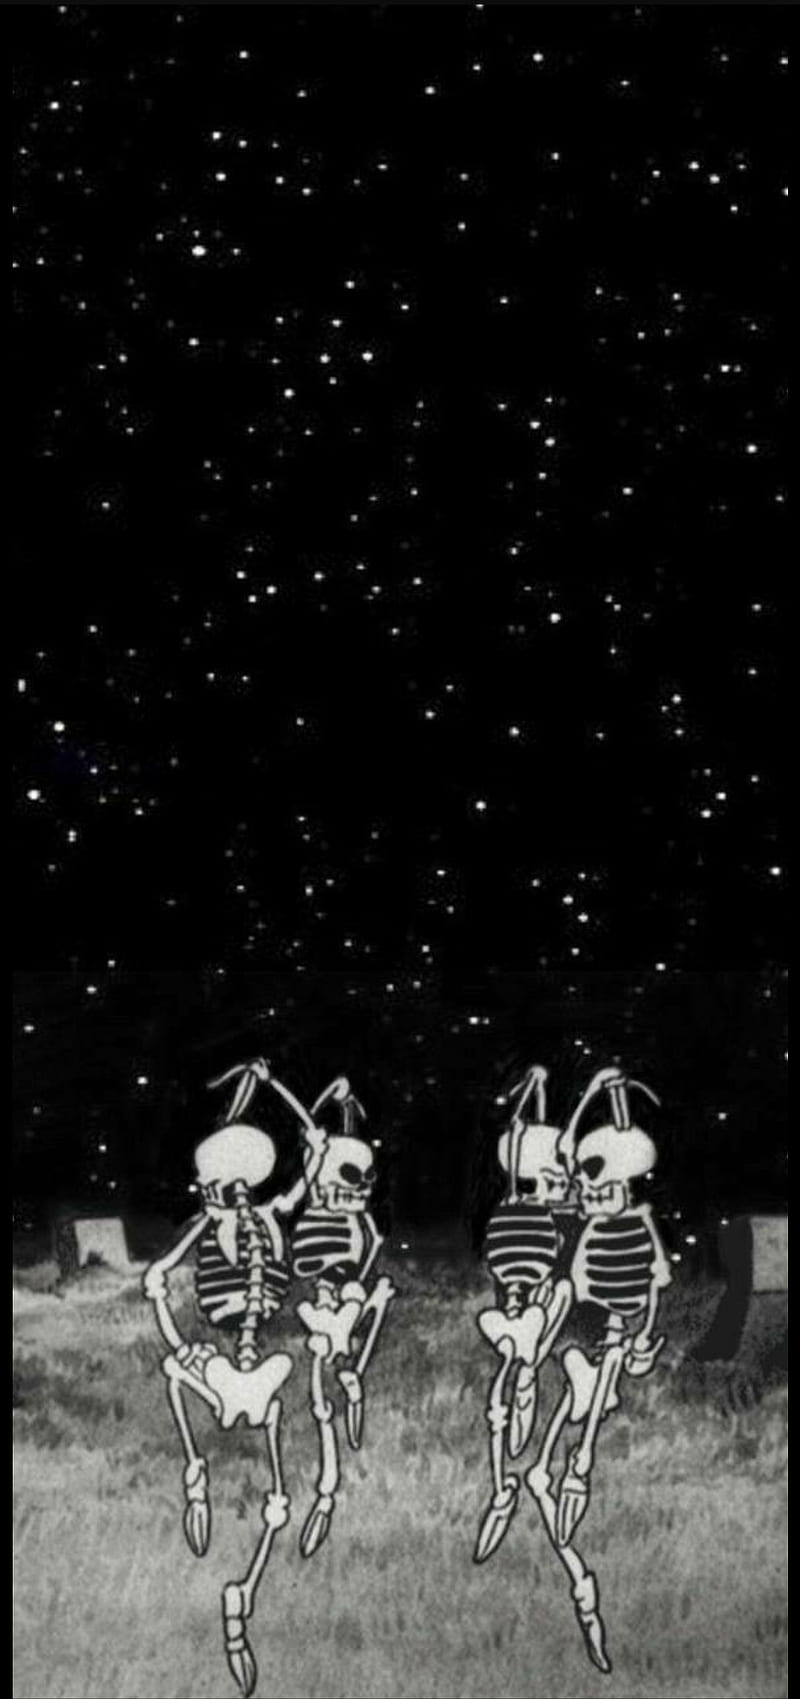 Four skeletons sitting on a grassy field under a starry sky - Dance, skeleton